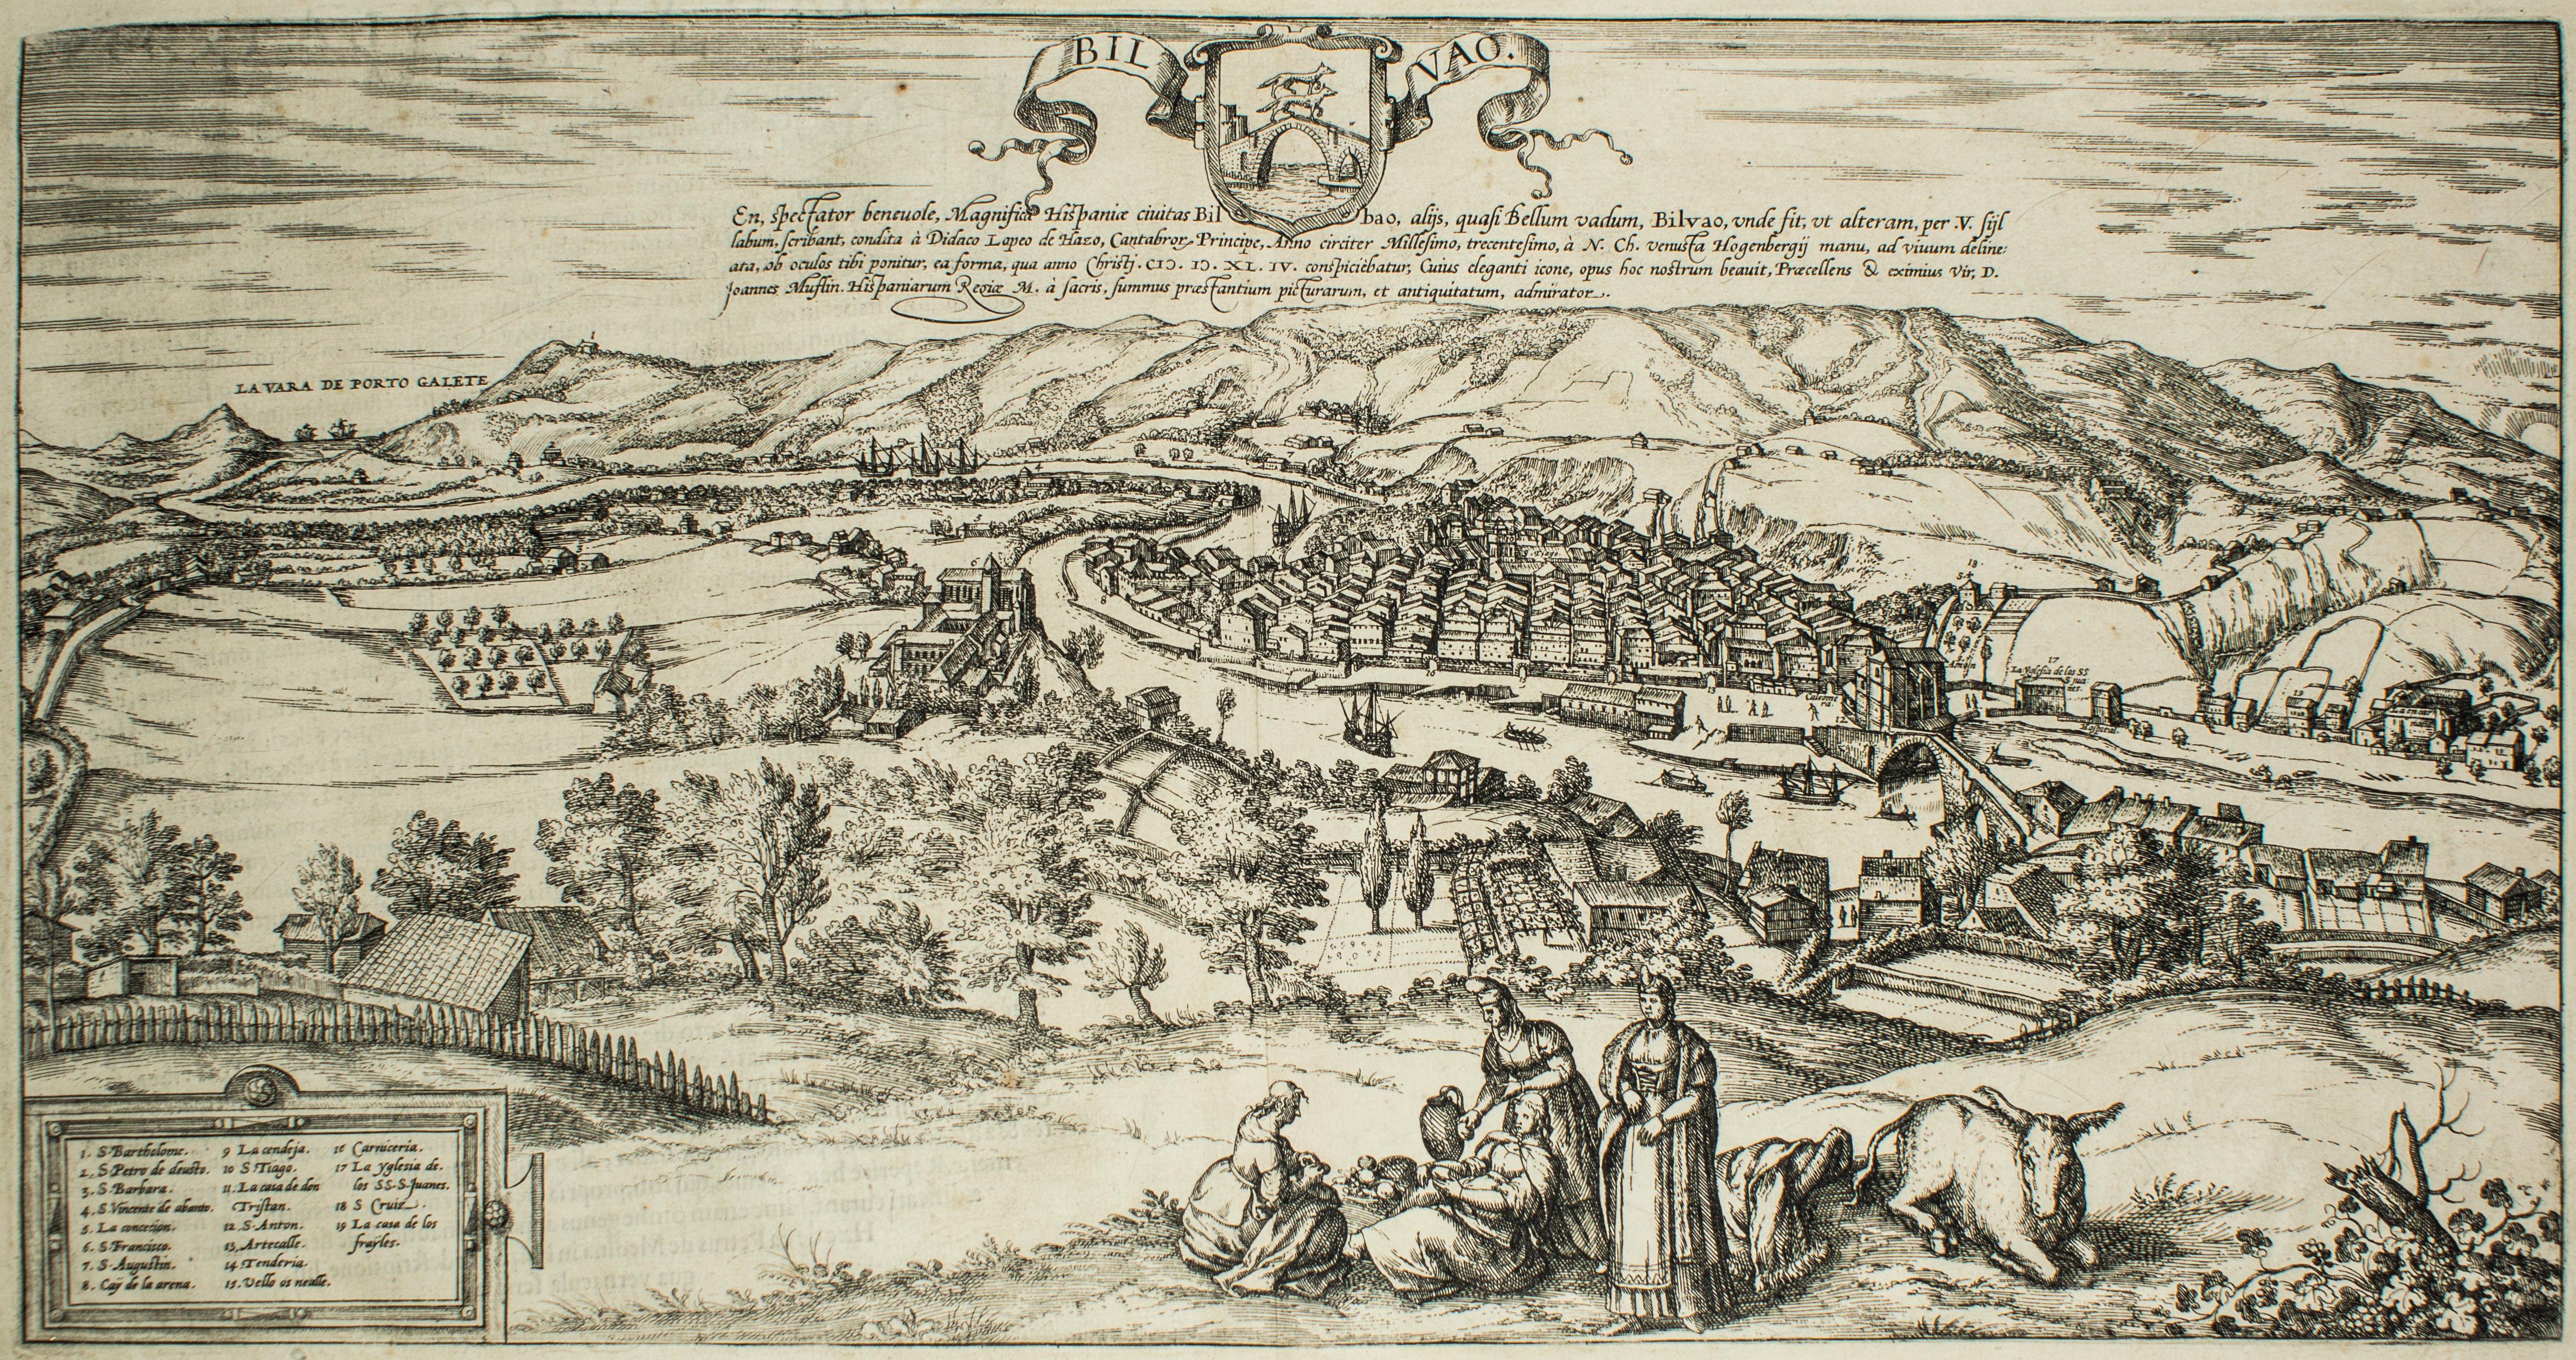 Frans Hogenberg Figurative Print - Bilbao, Antique Map from "Civitates Orbis Terrarum" - by F.Hogenberg - 1572-1617